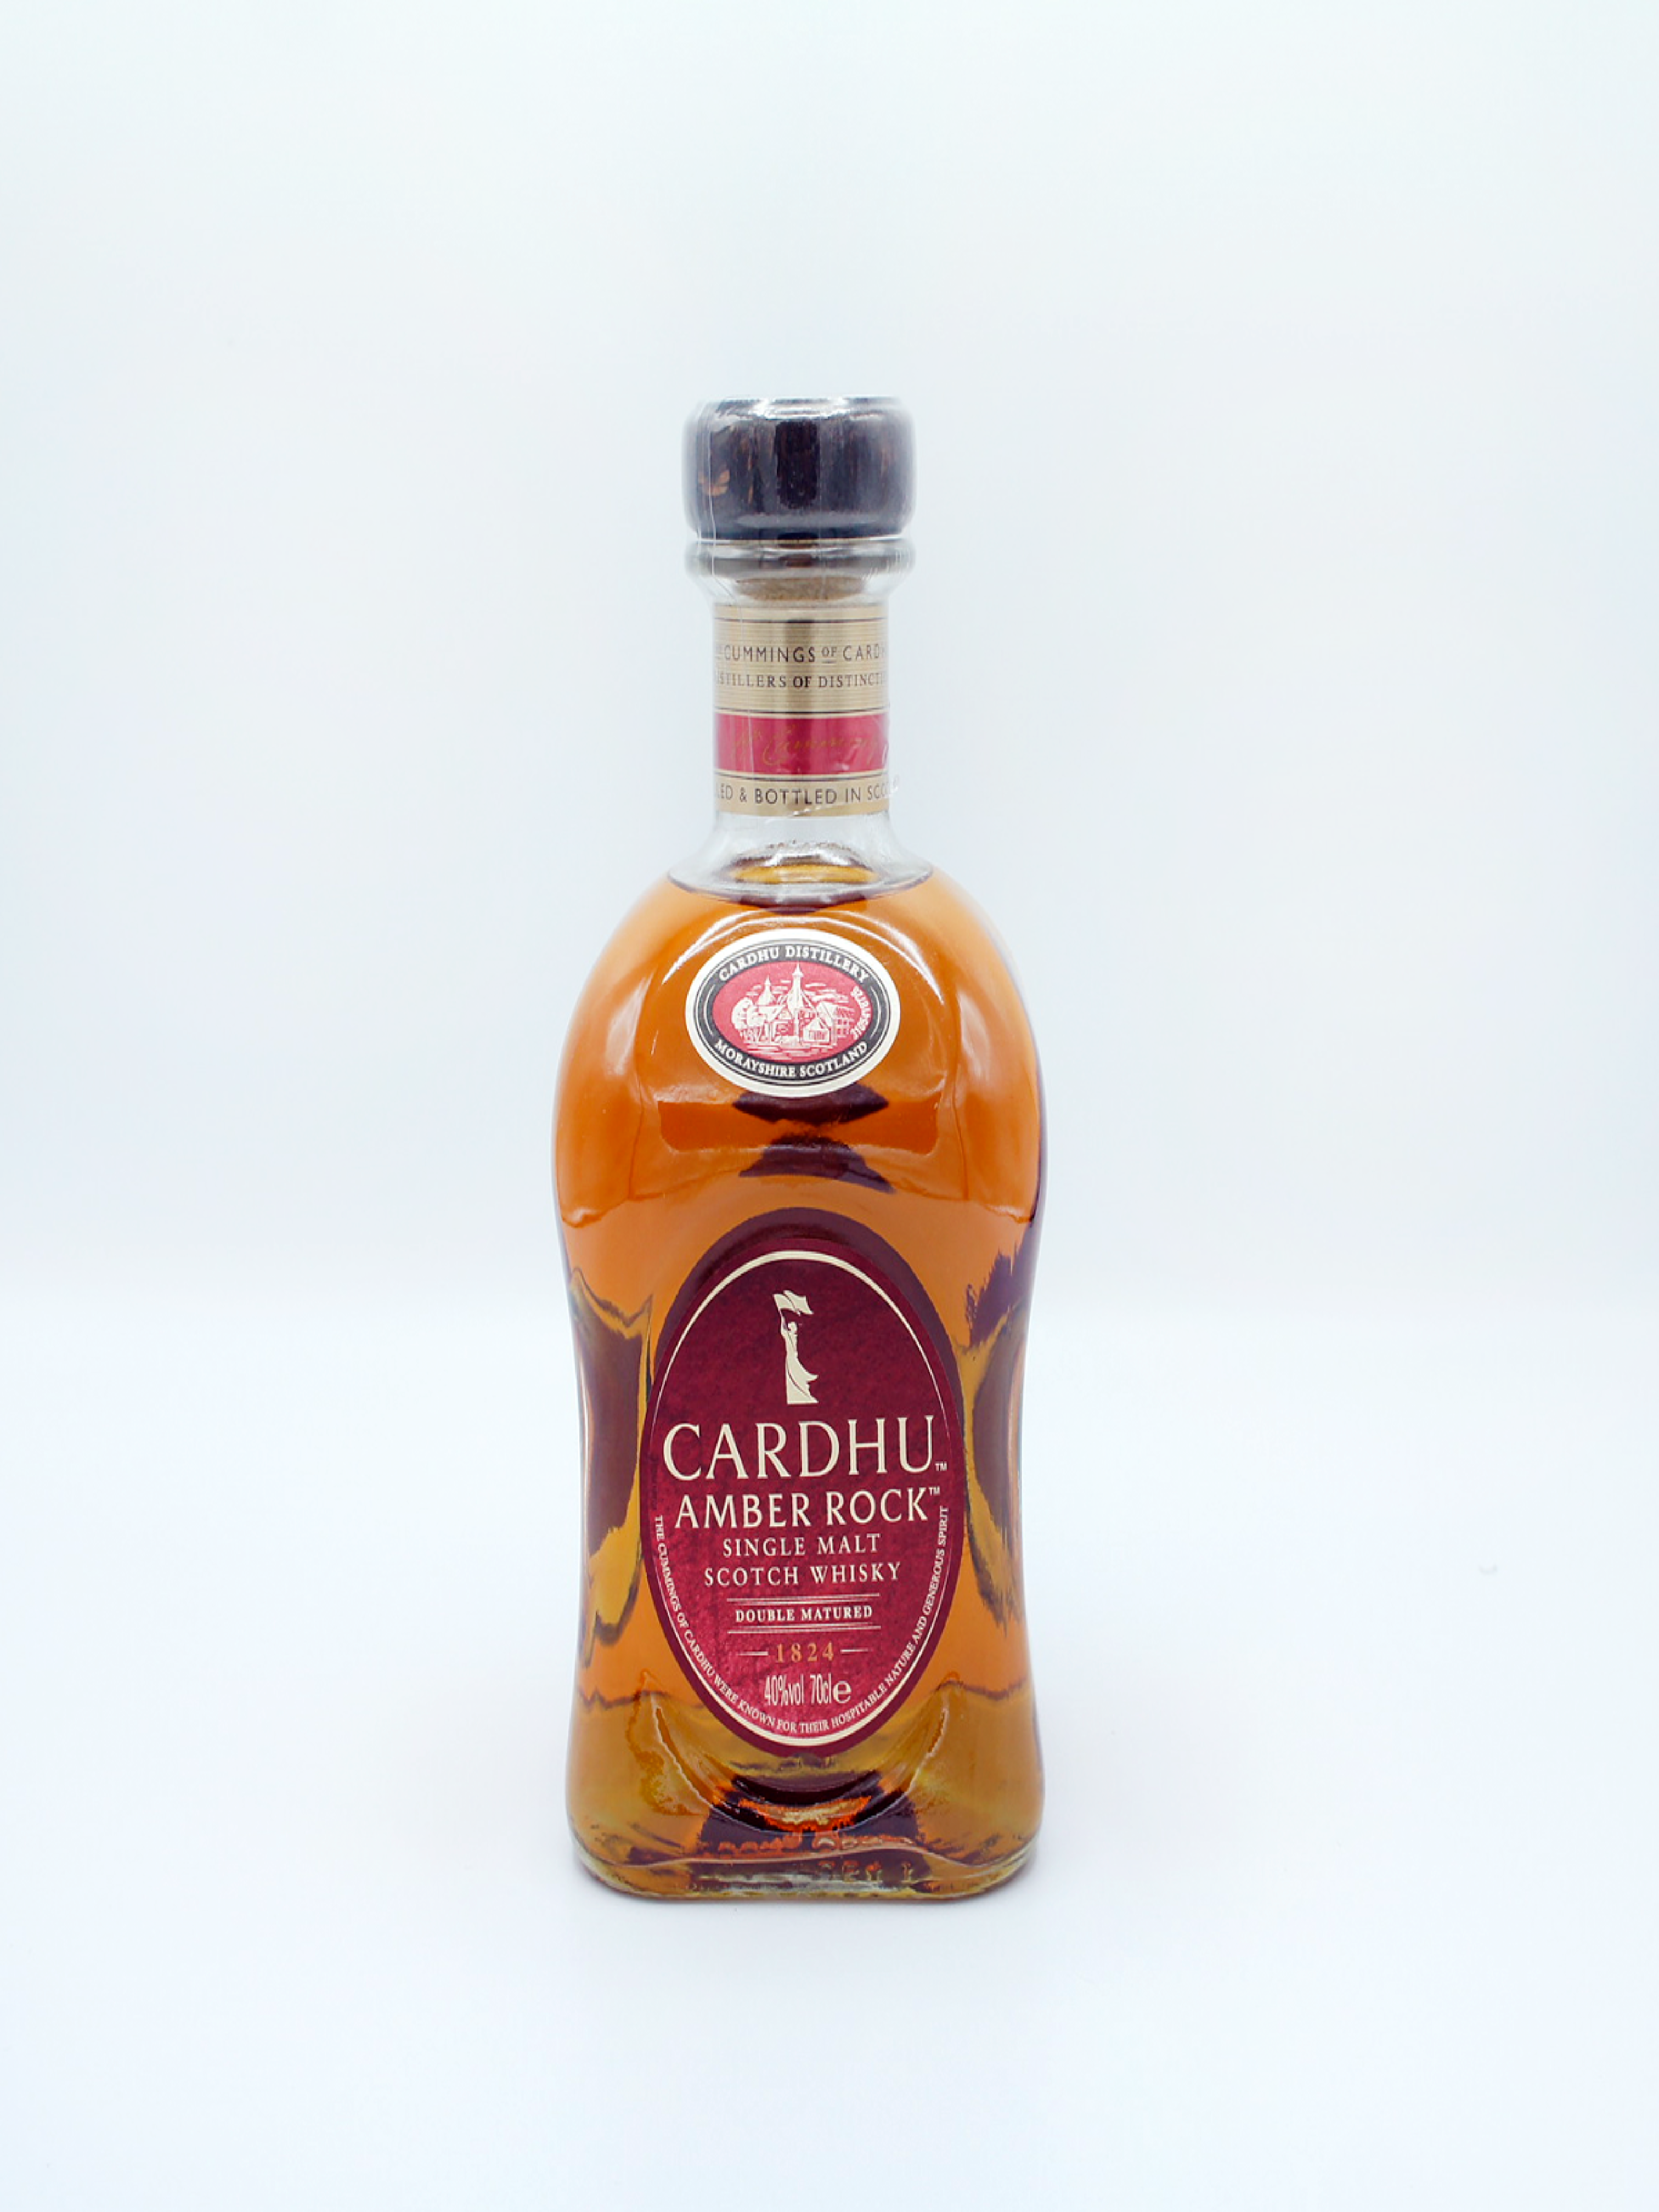 Cardhu "Amber Rock" - Single Malt Scotch Whisky